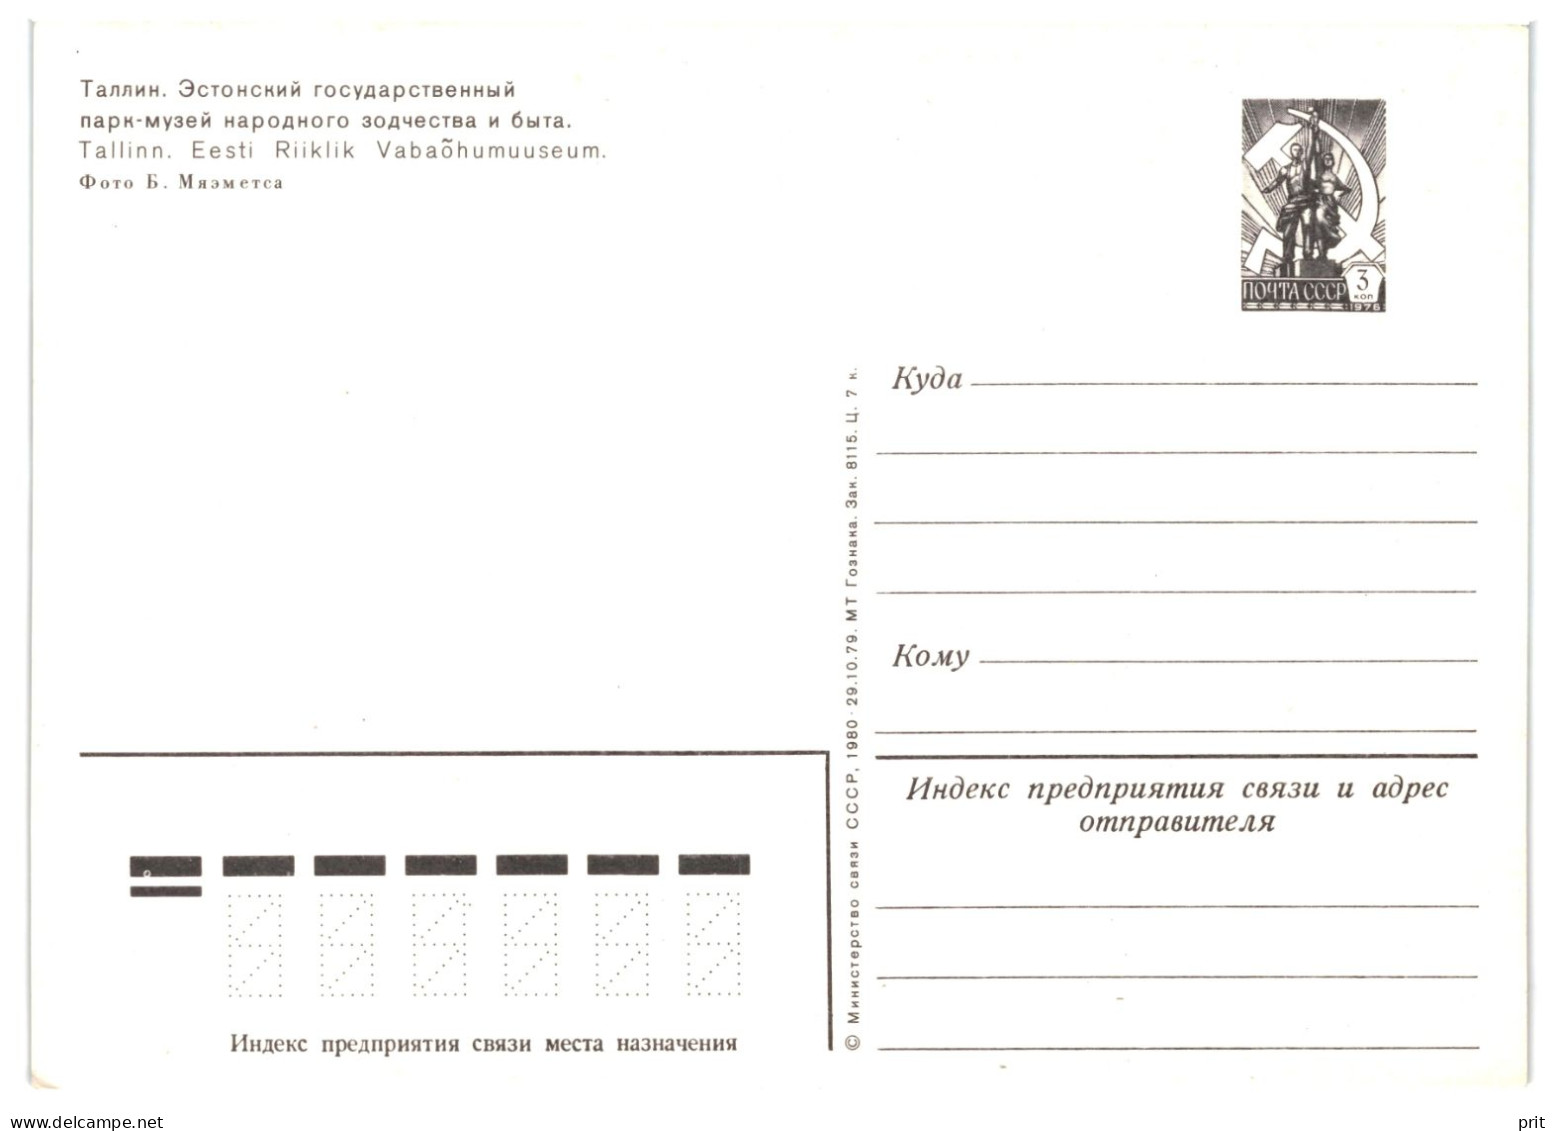 Folk Ensemble, Windmill Estonian Open Air Museum Tallinn Soviet Estonia USSR 1980 Postal Stationery Postcard Unused - 1980-91